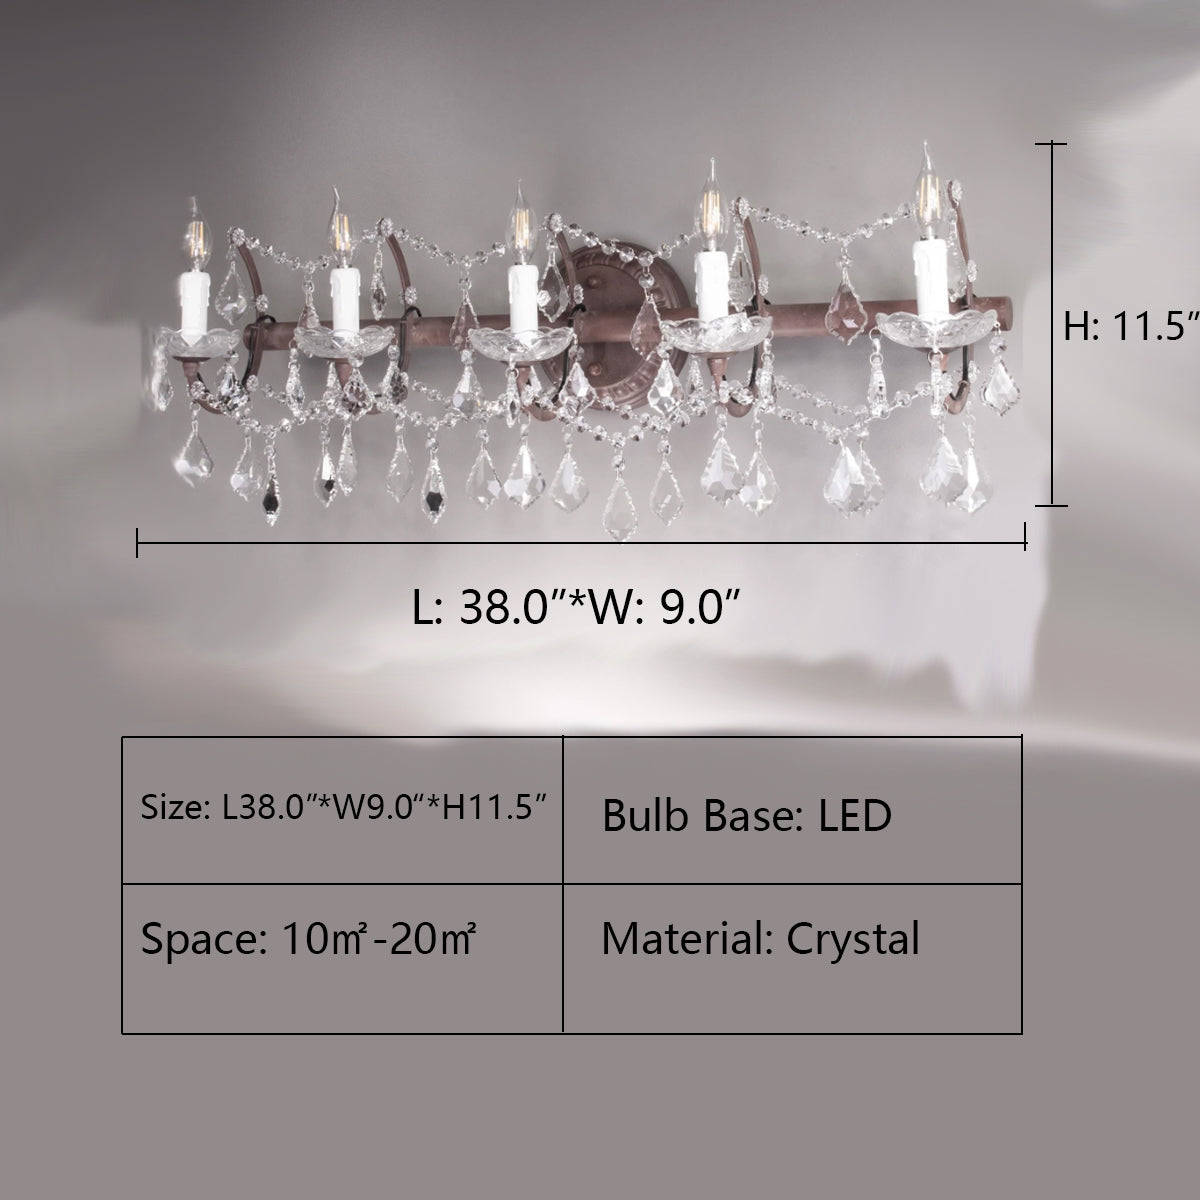 5Light: L38.0"*W9.0"*H11.5" wall light,wall source,candle,crystal pendant,rectangle,raindrop,teardrop,classical,pendant,light,lamp